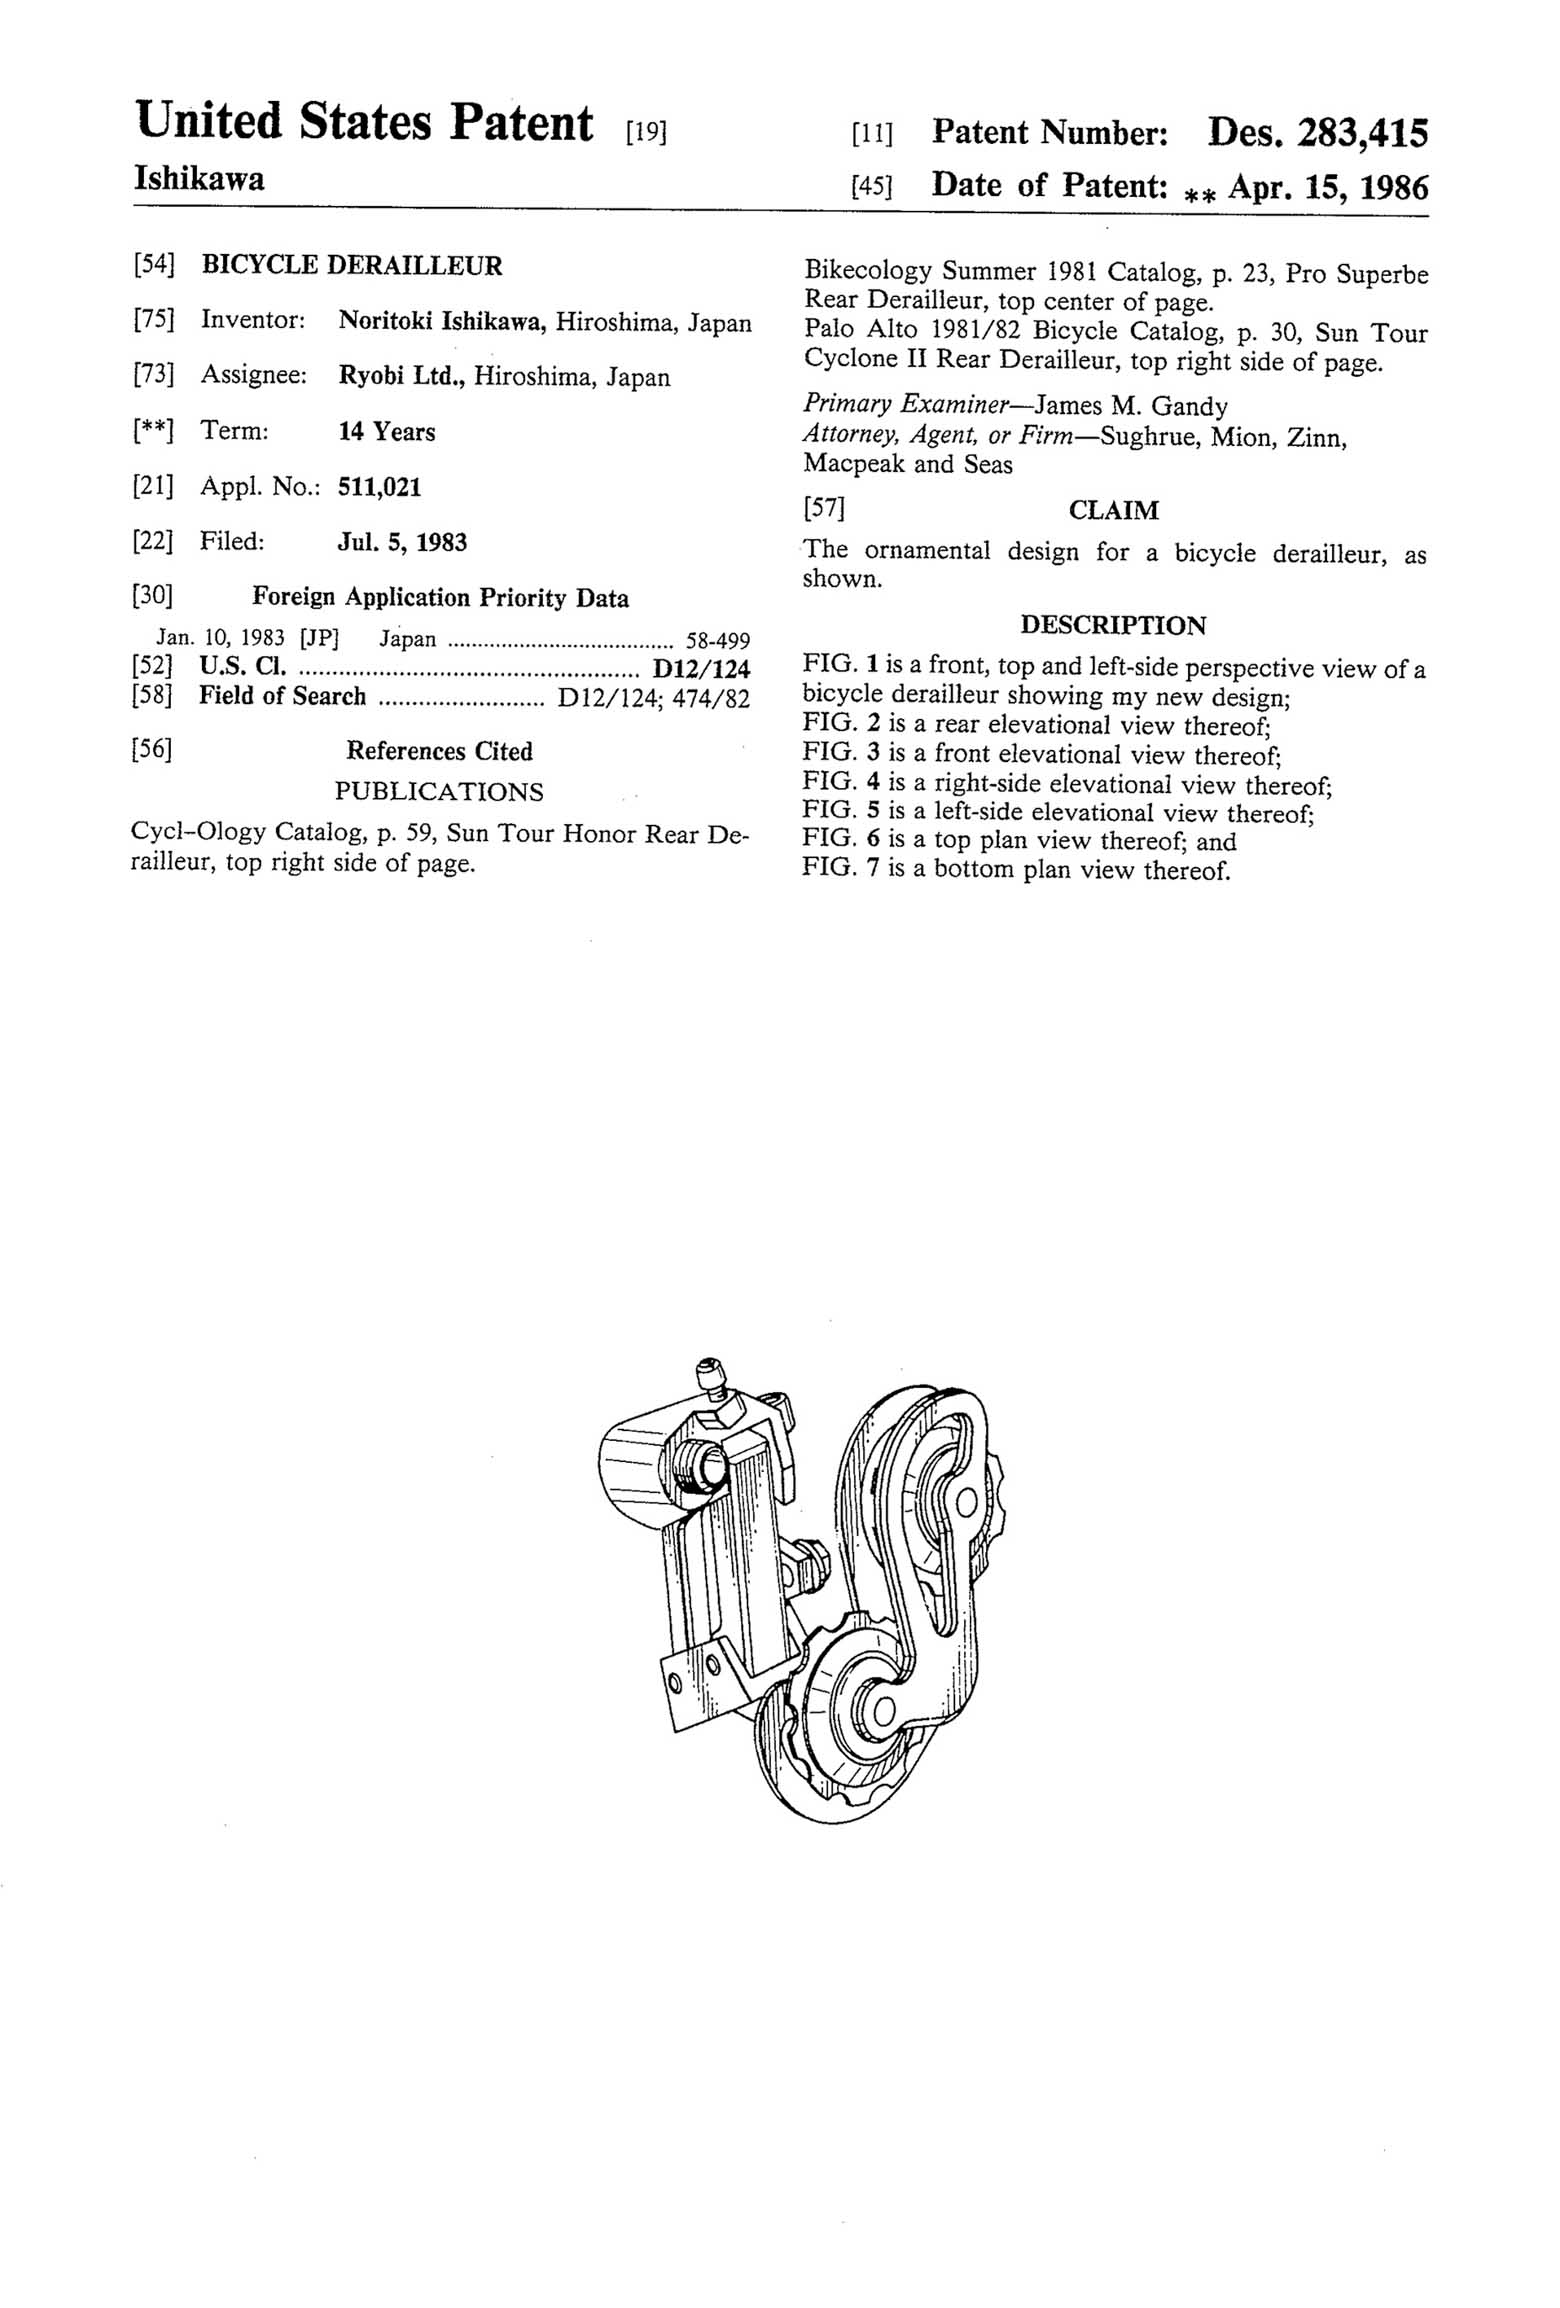 US Design Patent 283,415 scan 1 main image